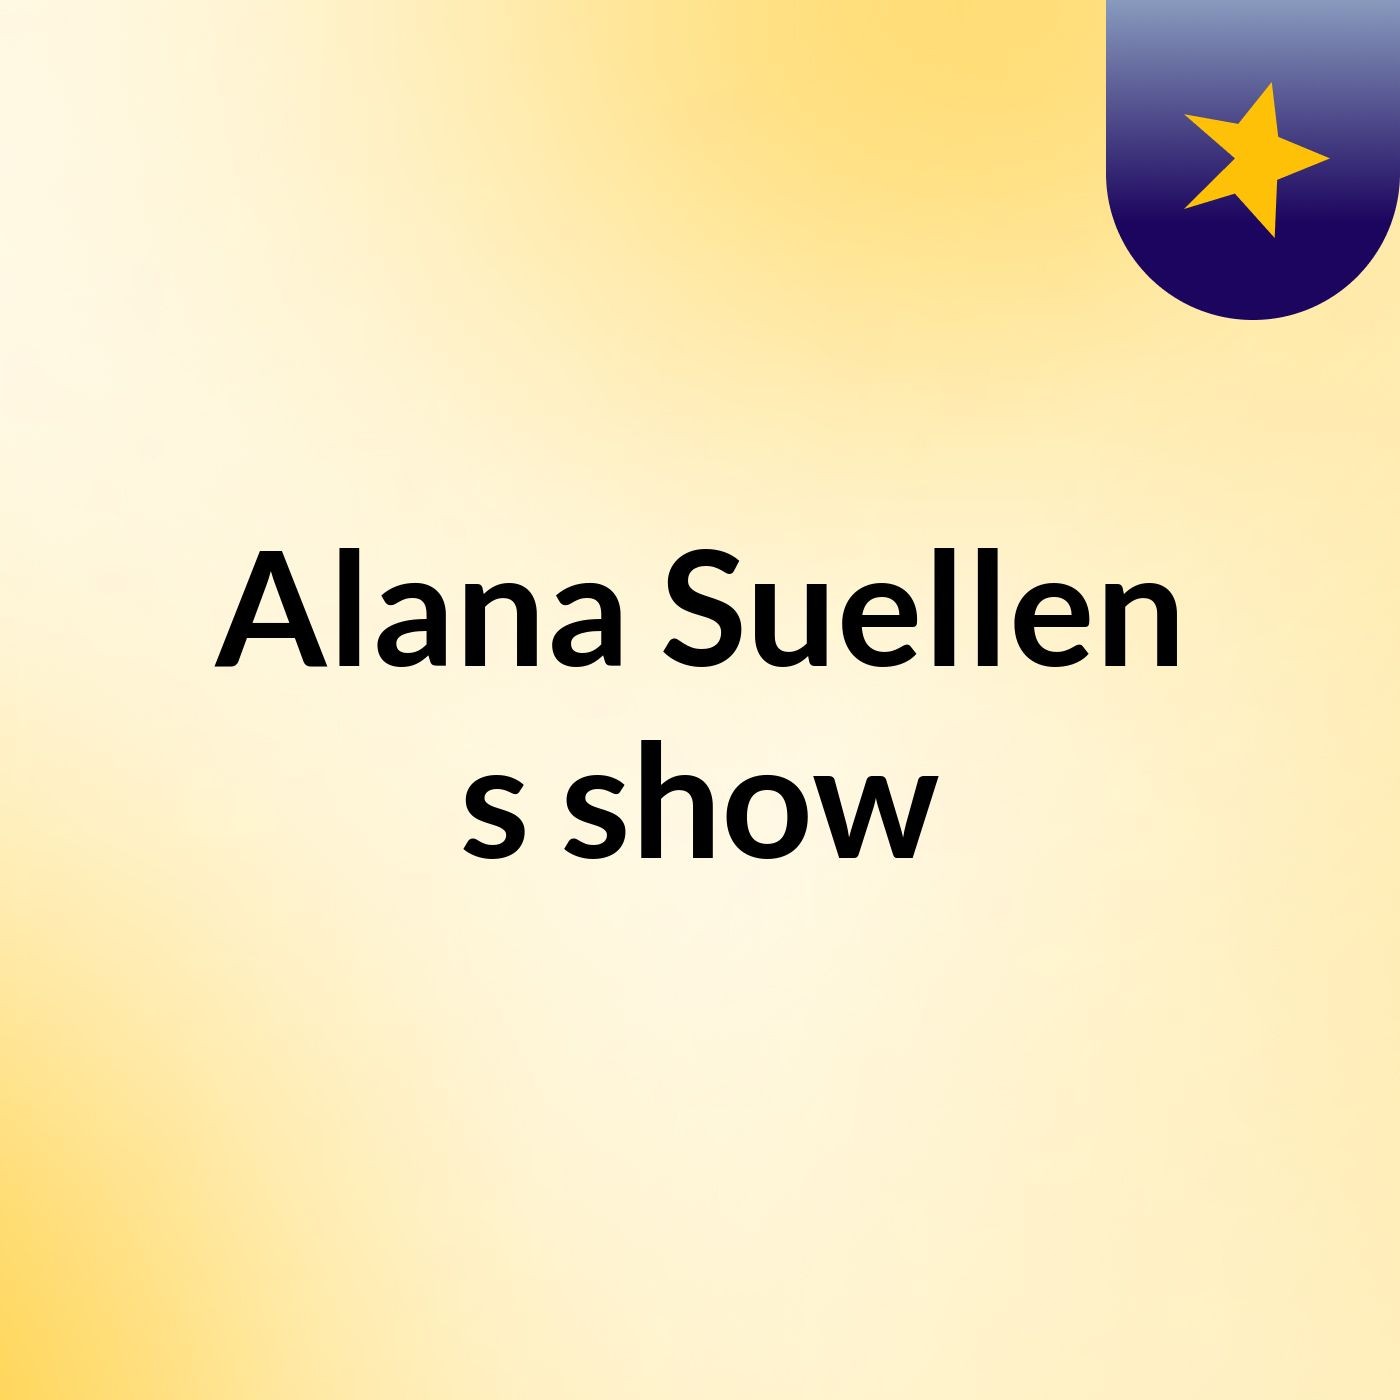 Alana Suellen's show